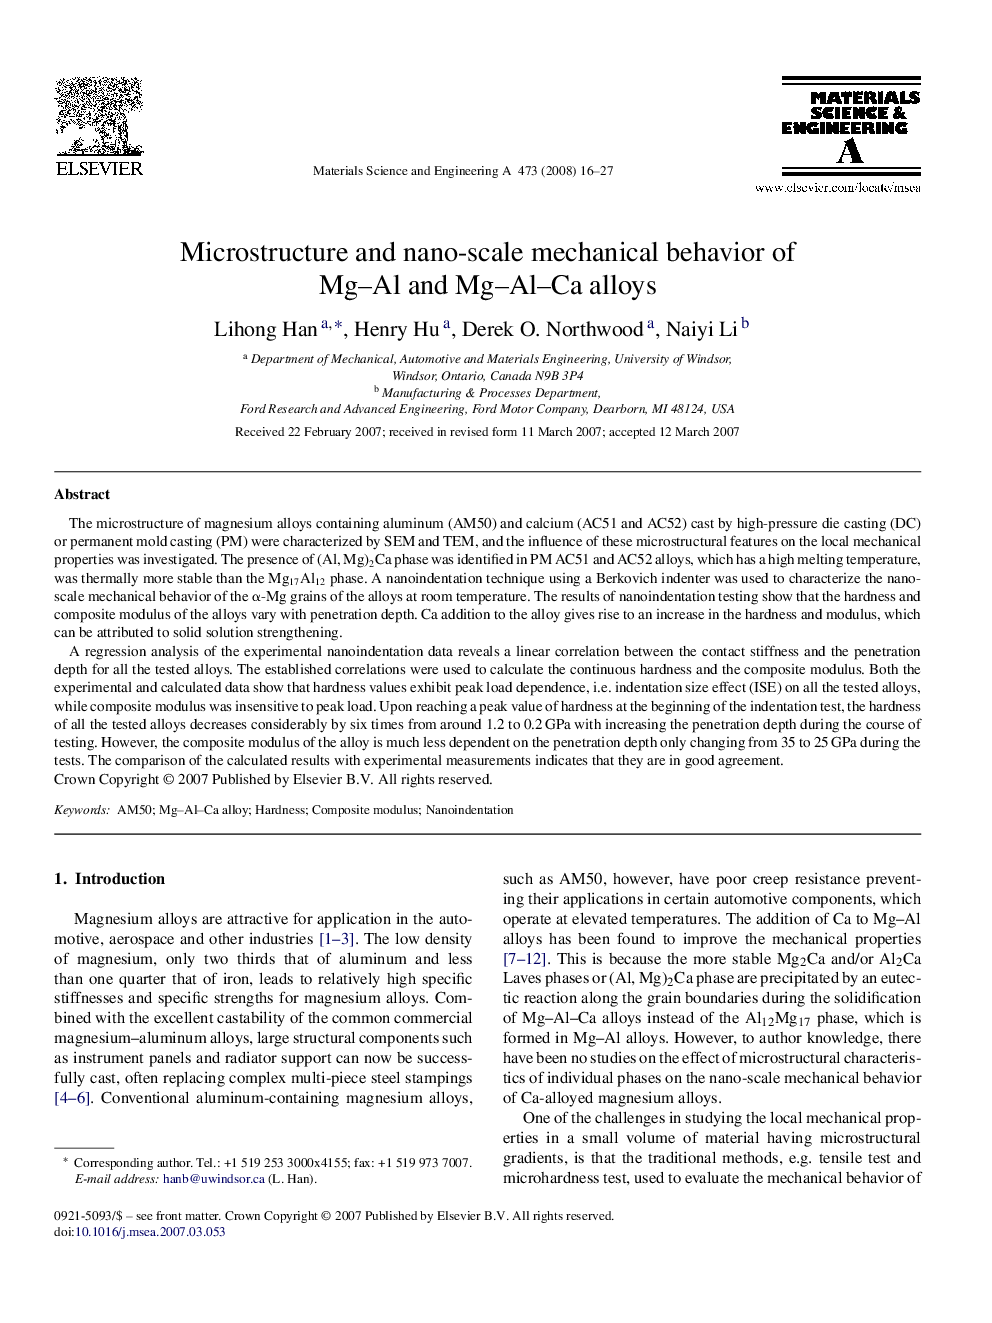 Microstructure and nano-scale mechanical behavior of Mg-Al and Mg-Al-Ca alloys